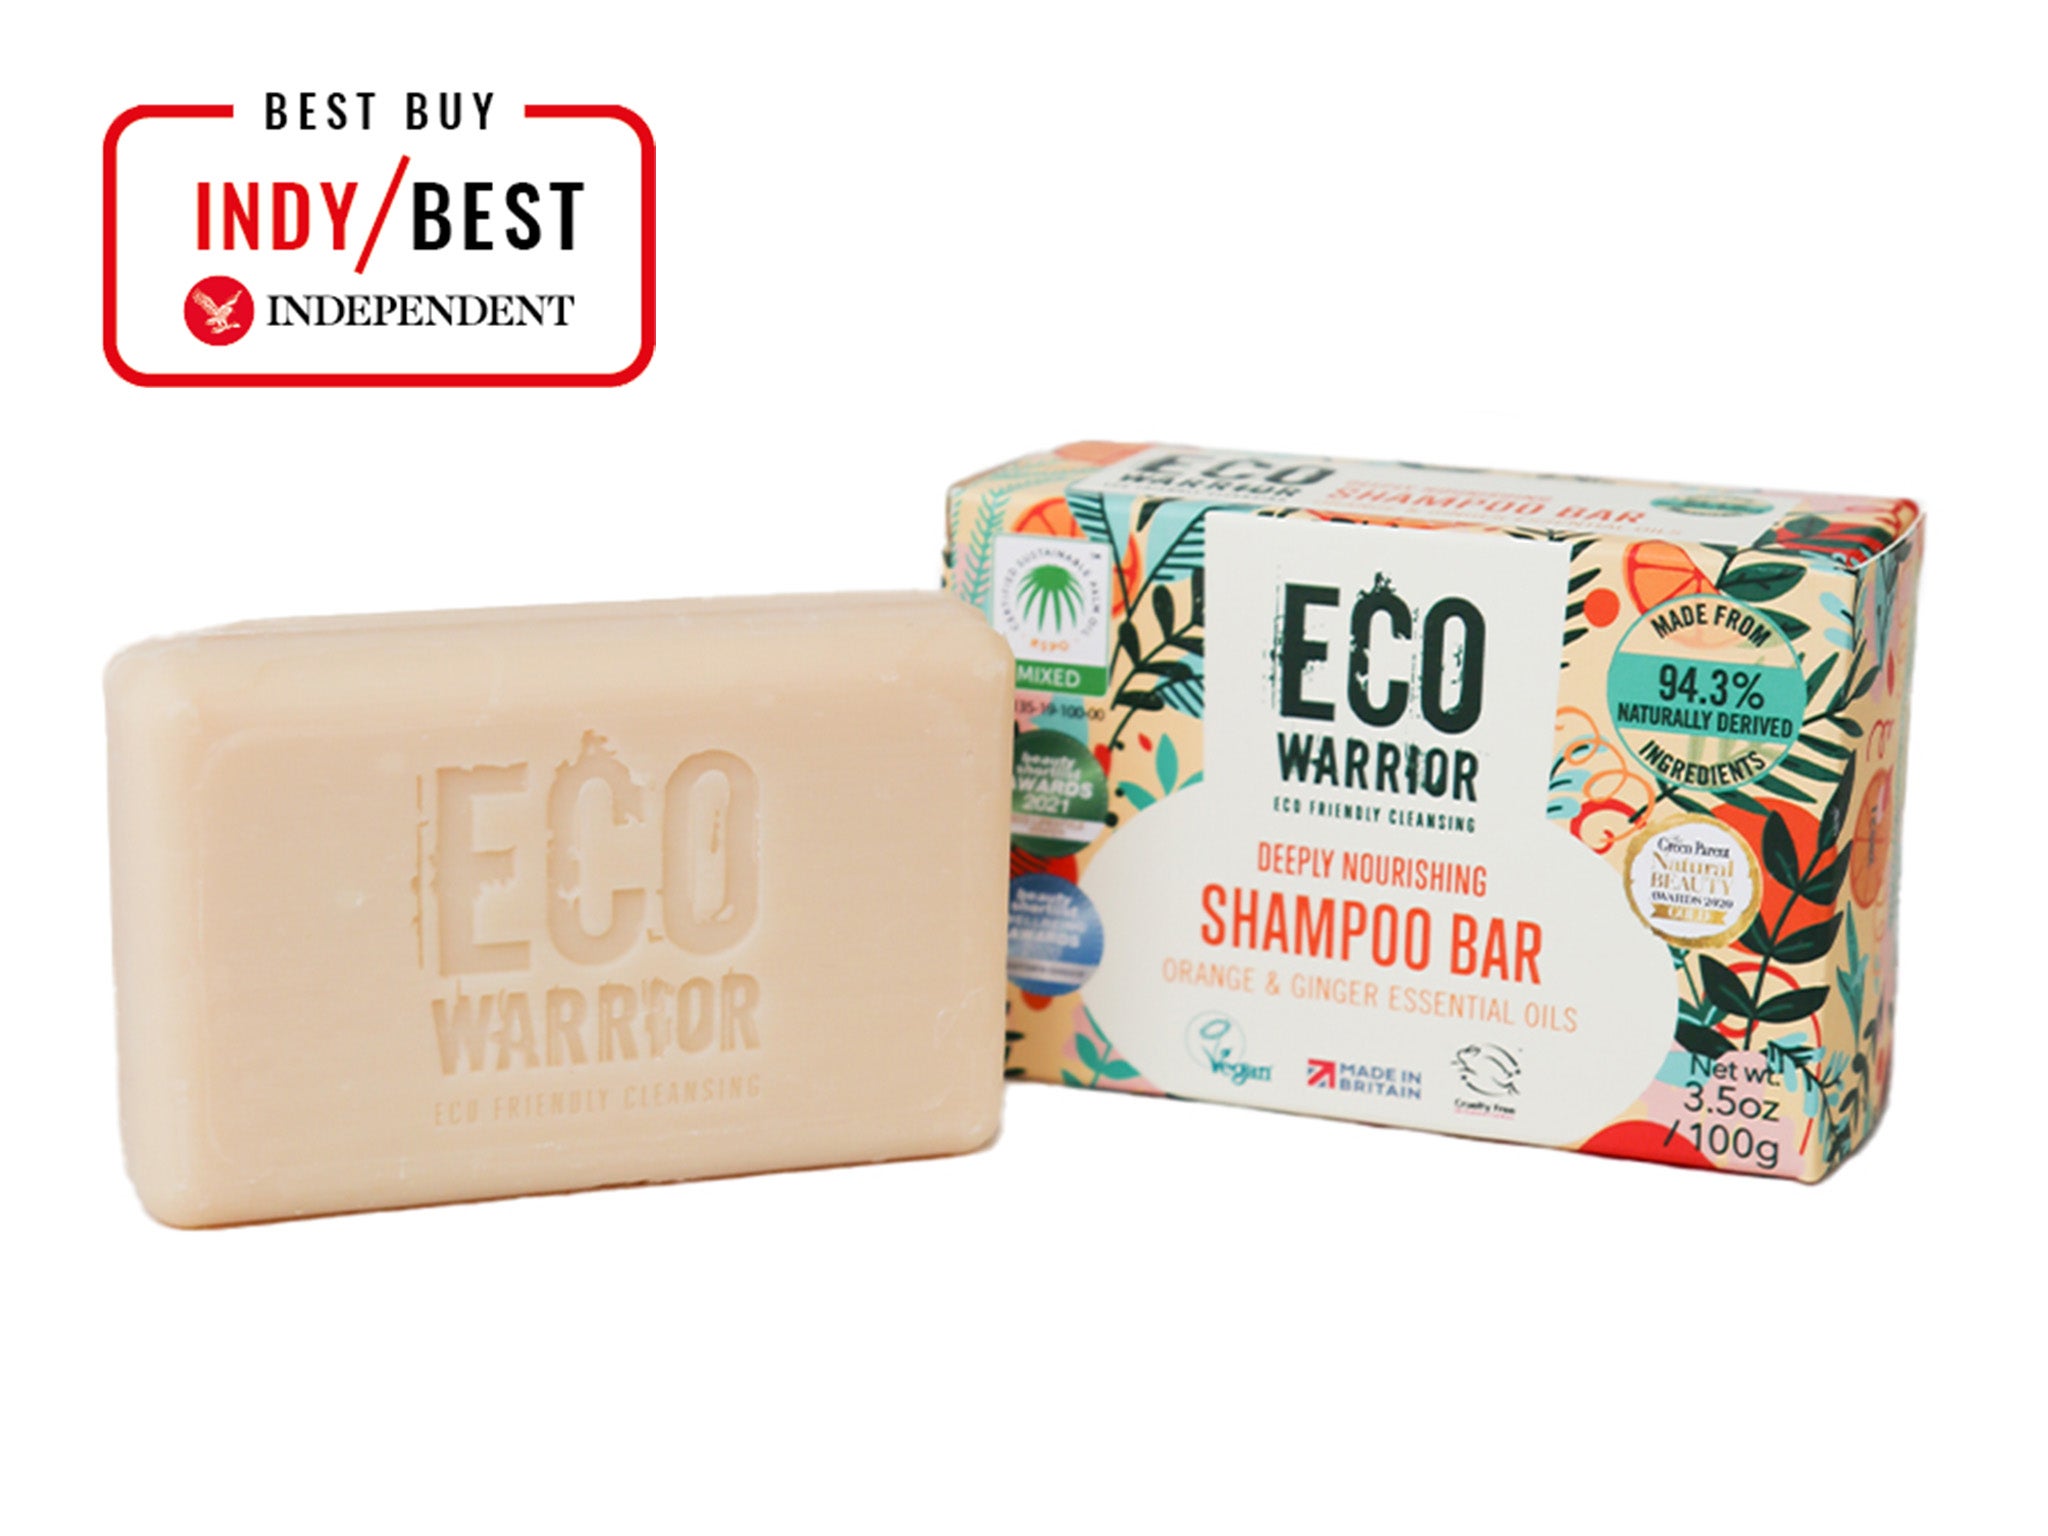 Eco Warrior deeply nourishing shampoo bar 